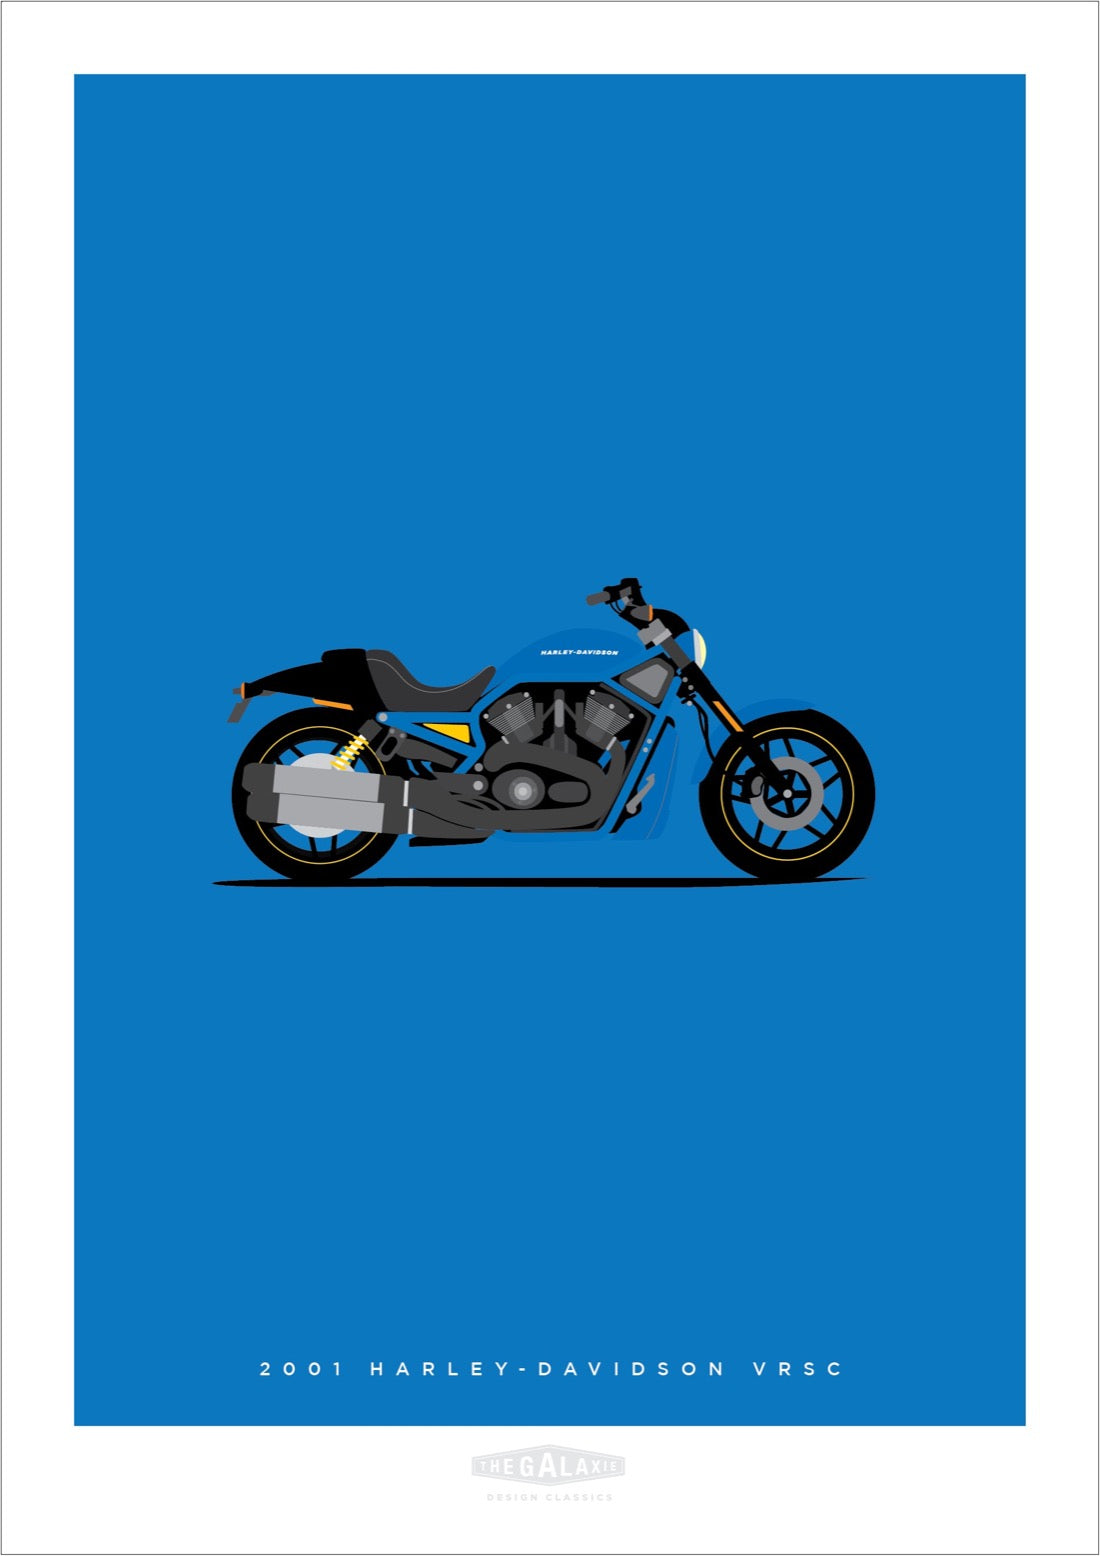 Hand drawn print of a blue 2001 Harley Davidson VRSC on a blue background.